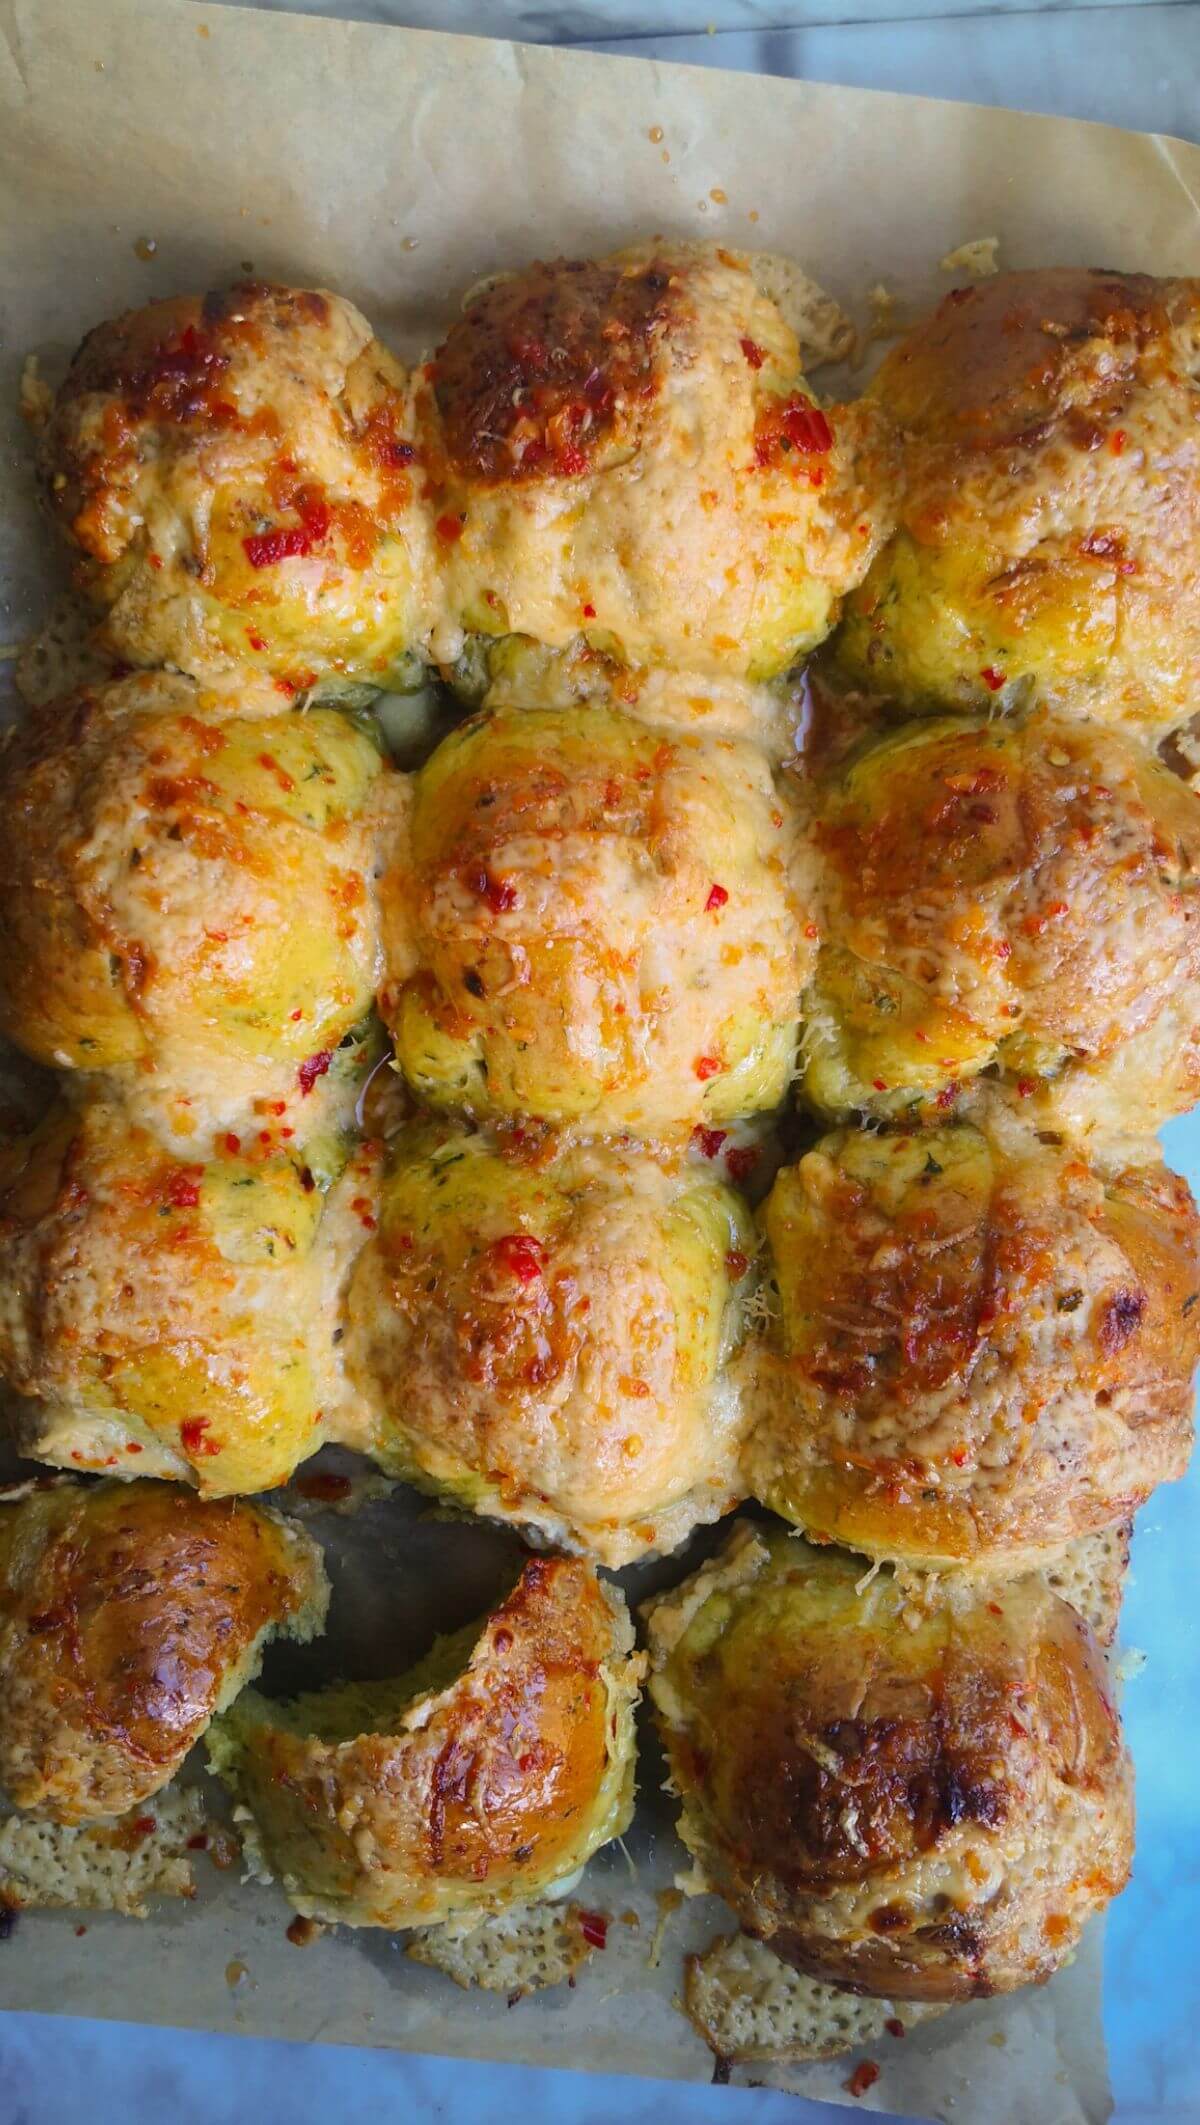 12 wild garlic hot cross buns on a lined baking tray.